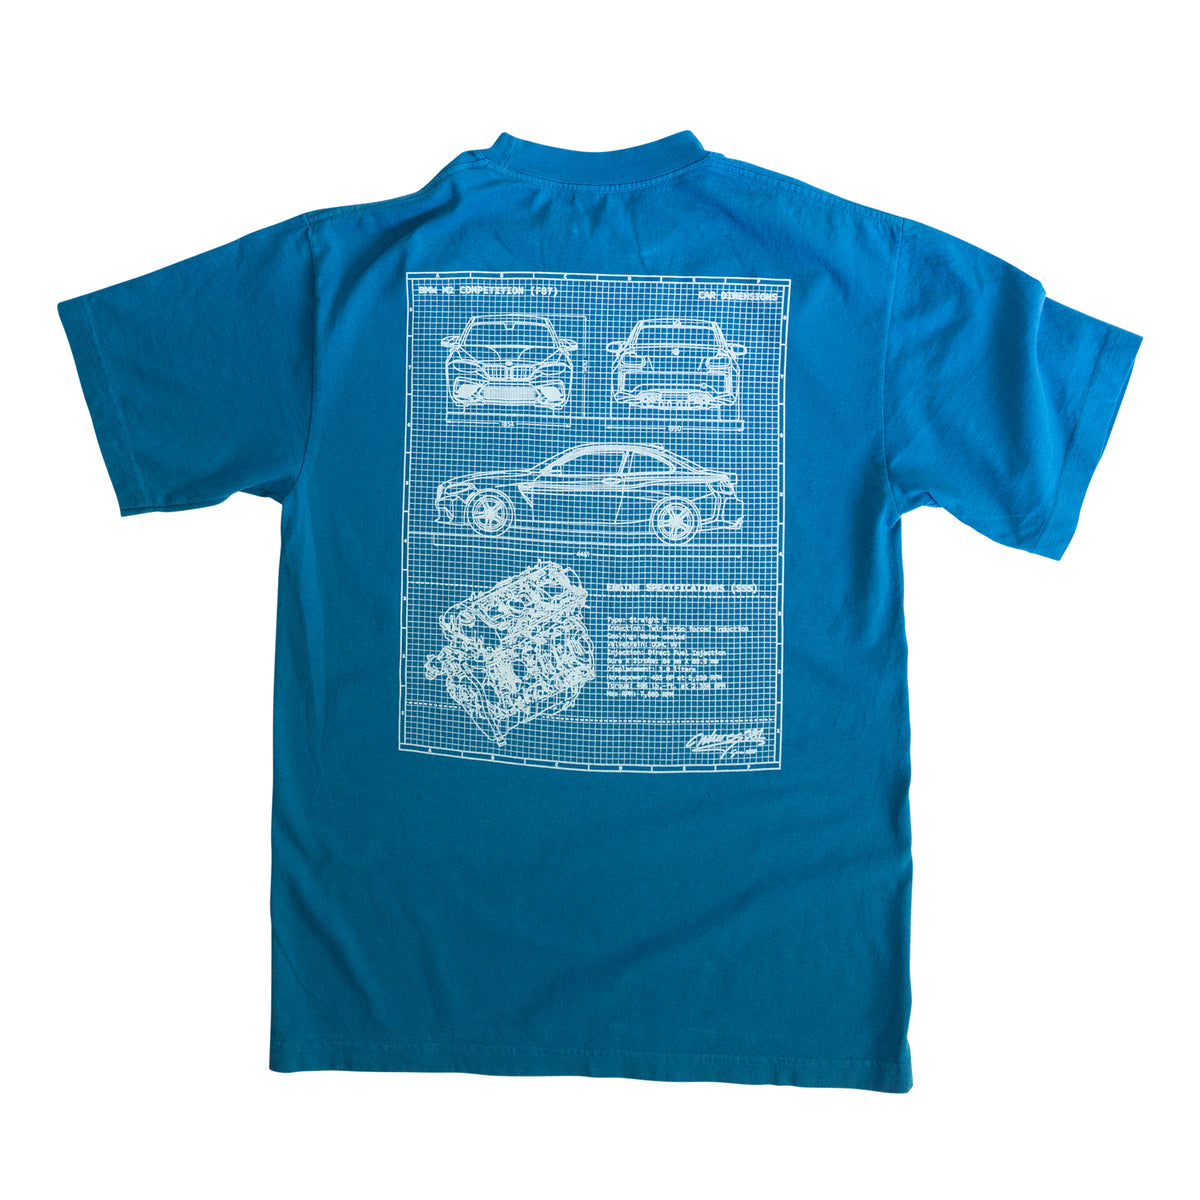 The 918 Spyder Blueprint T-Shirt by Mark Rogan - Pixels